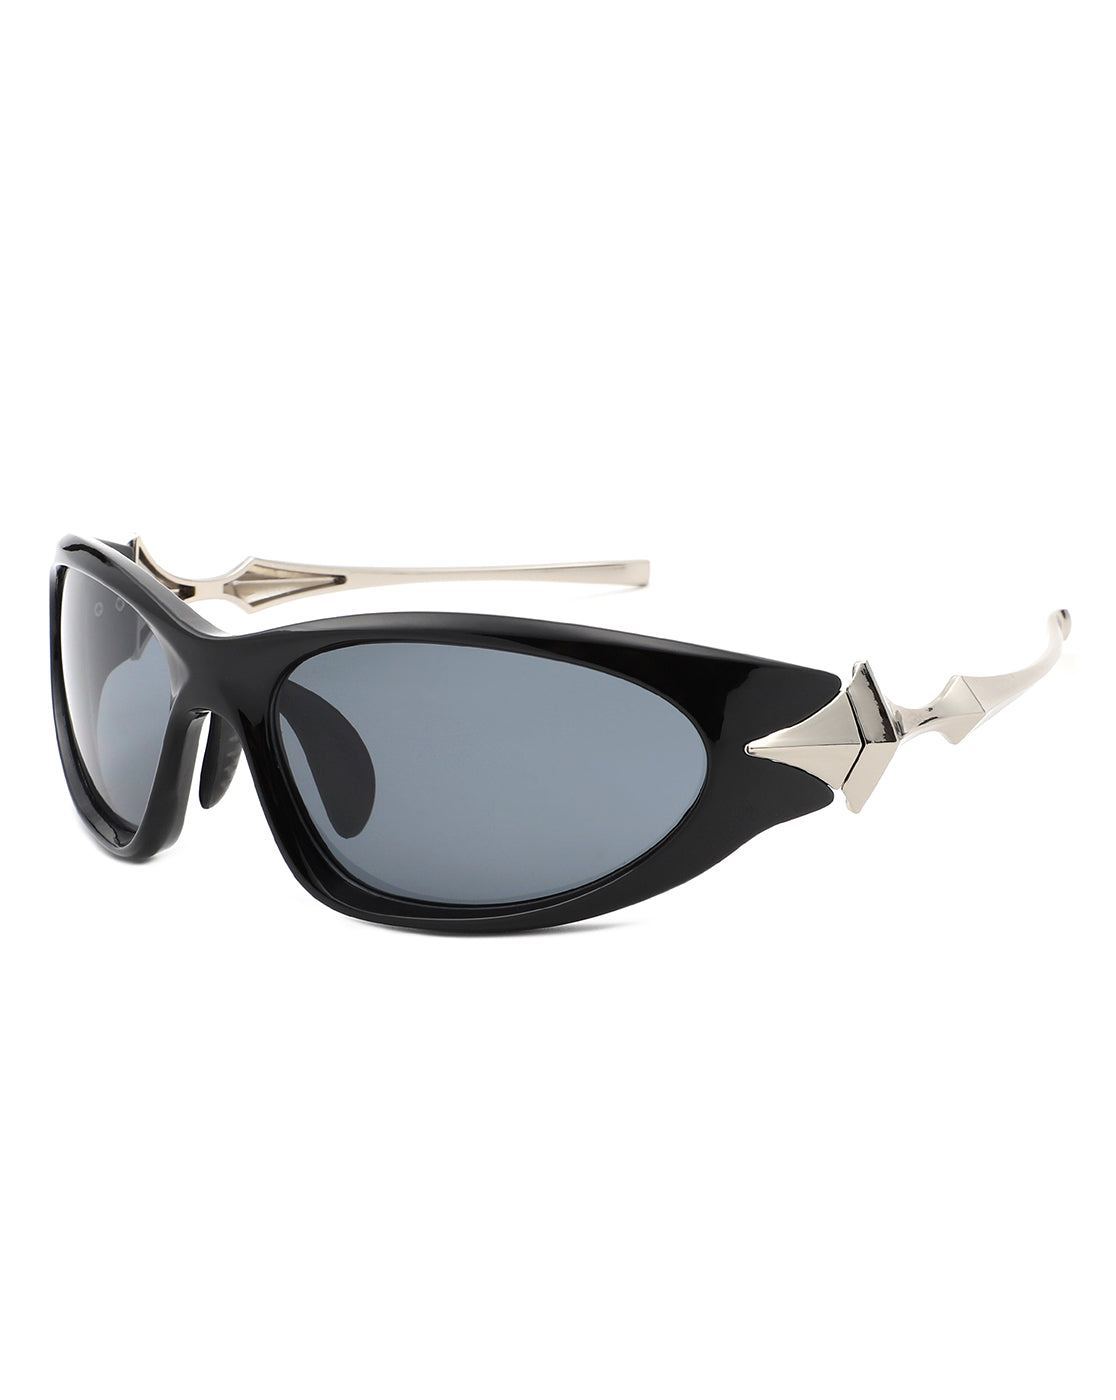 Creastein - Irregular Oval Sporty Wrap-Around Sunglasses